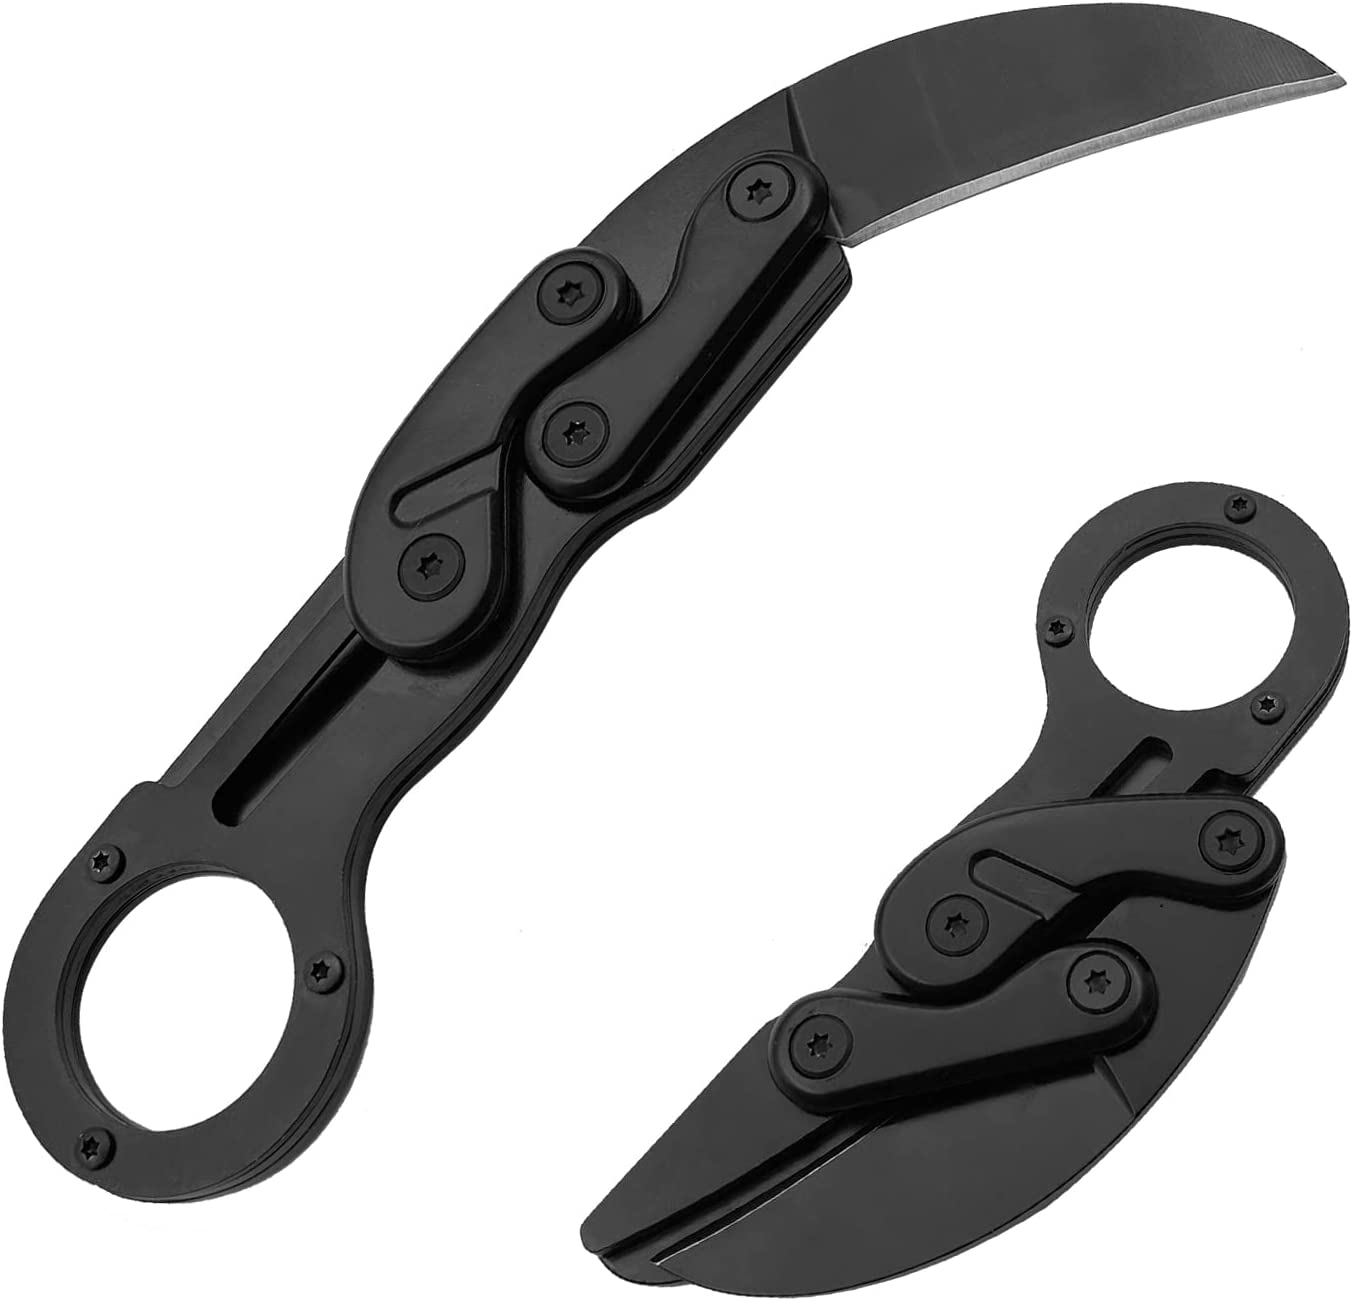  Karambit Knife Folding With Pocket Clip - Tactical